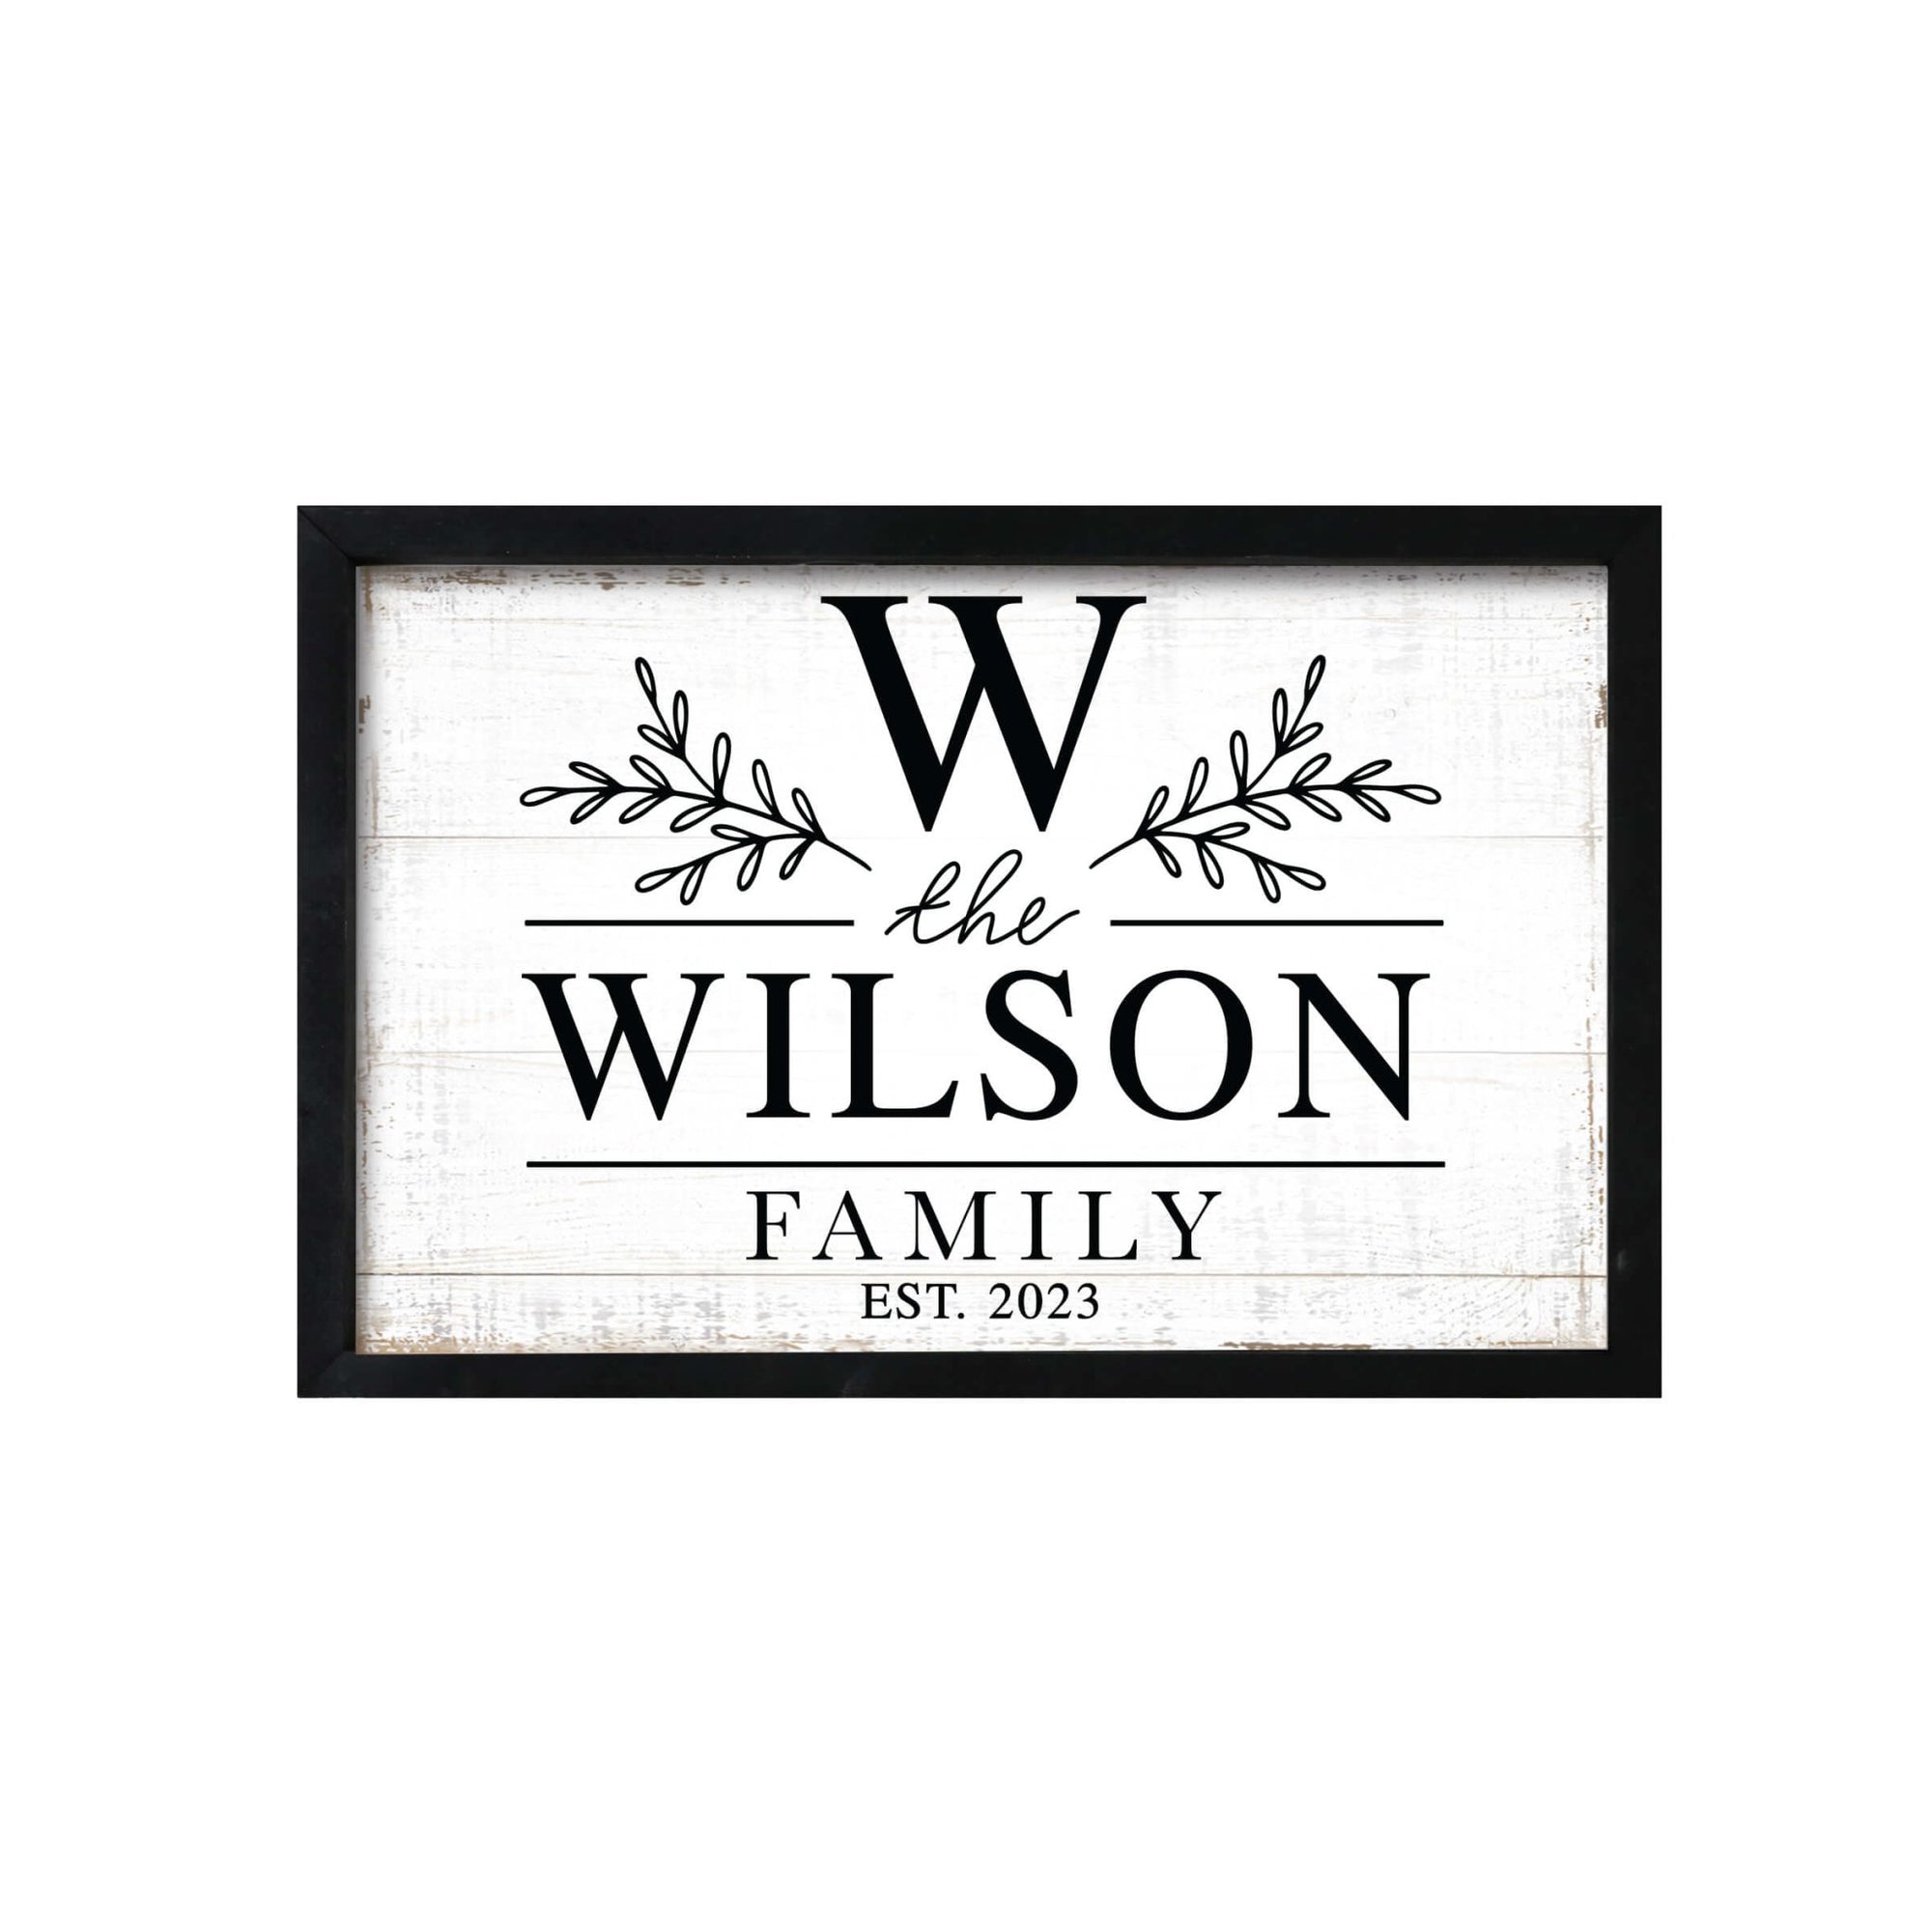 Customized Home Décor Framed Shadow Box With Family Name - Wilson Family